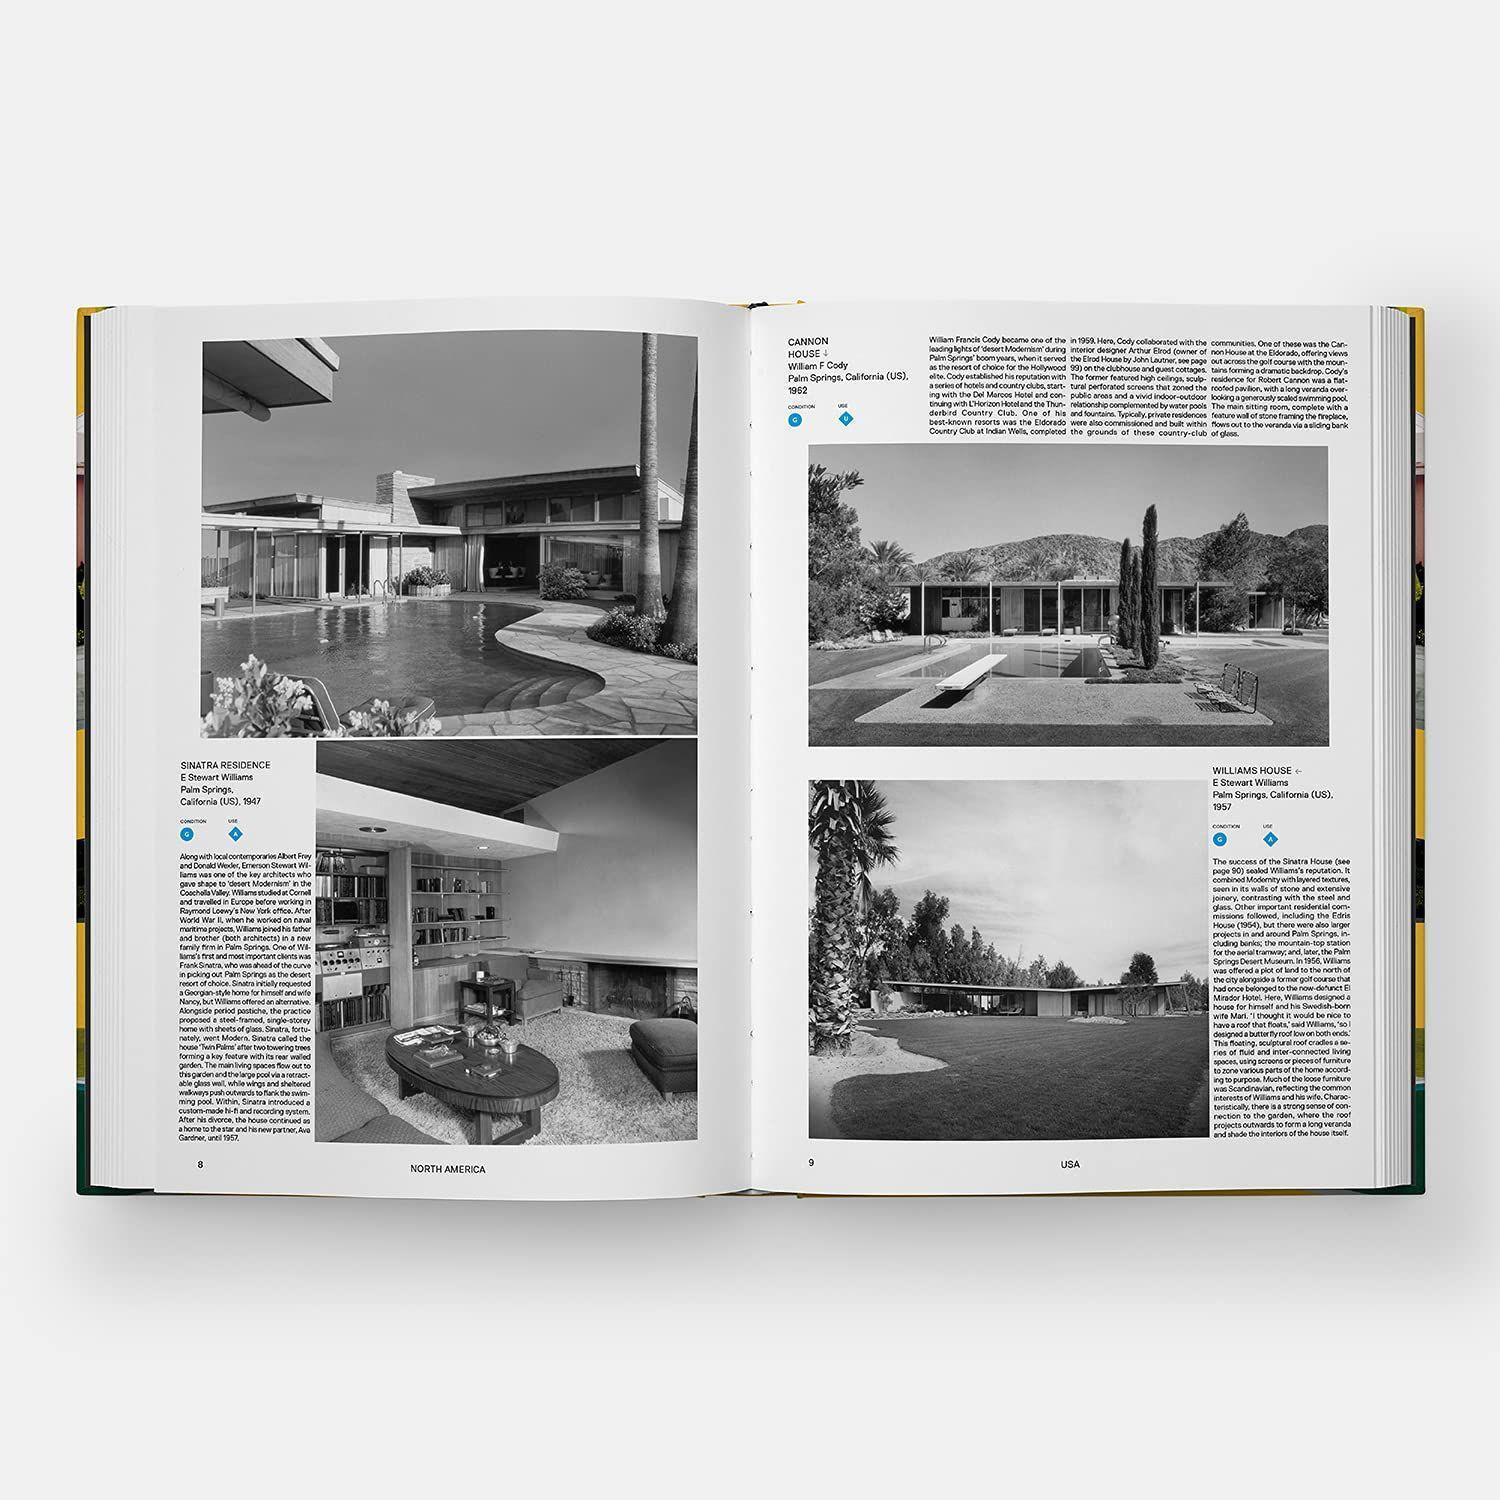 Bild: 9781838663391 | Atlas of Mid-Century Modern Houses, Classic format | Dominic Bradbury